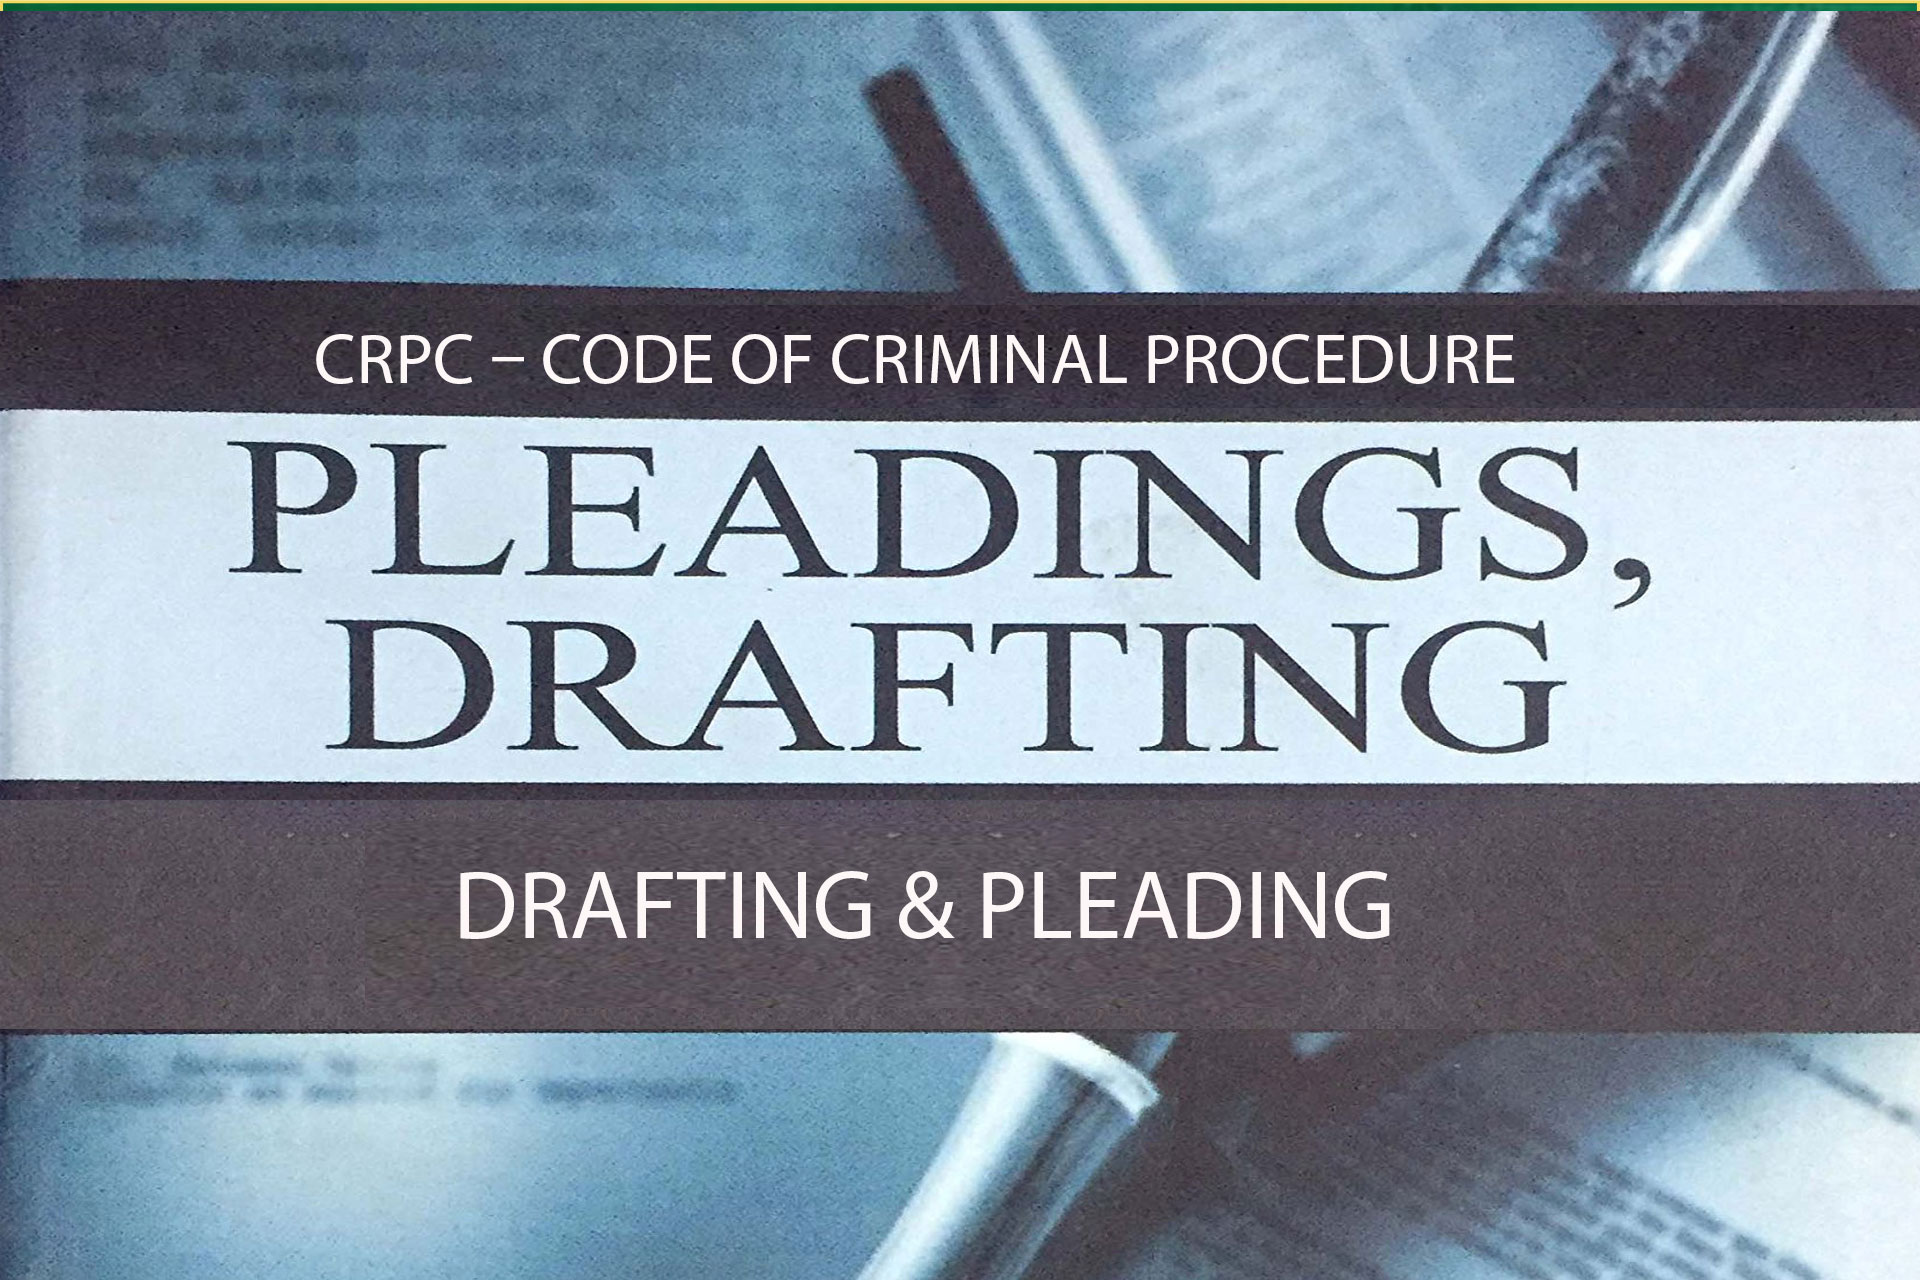 Drafting & Pleading